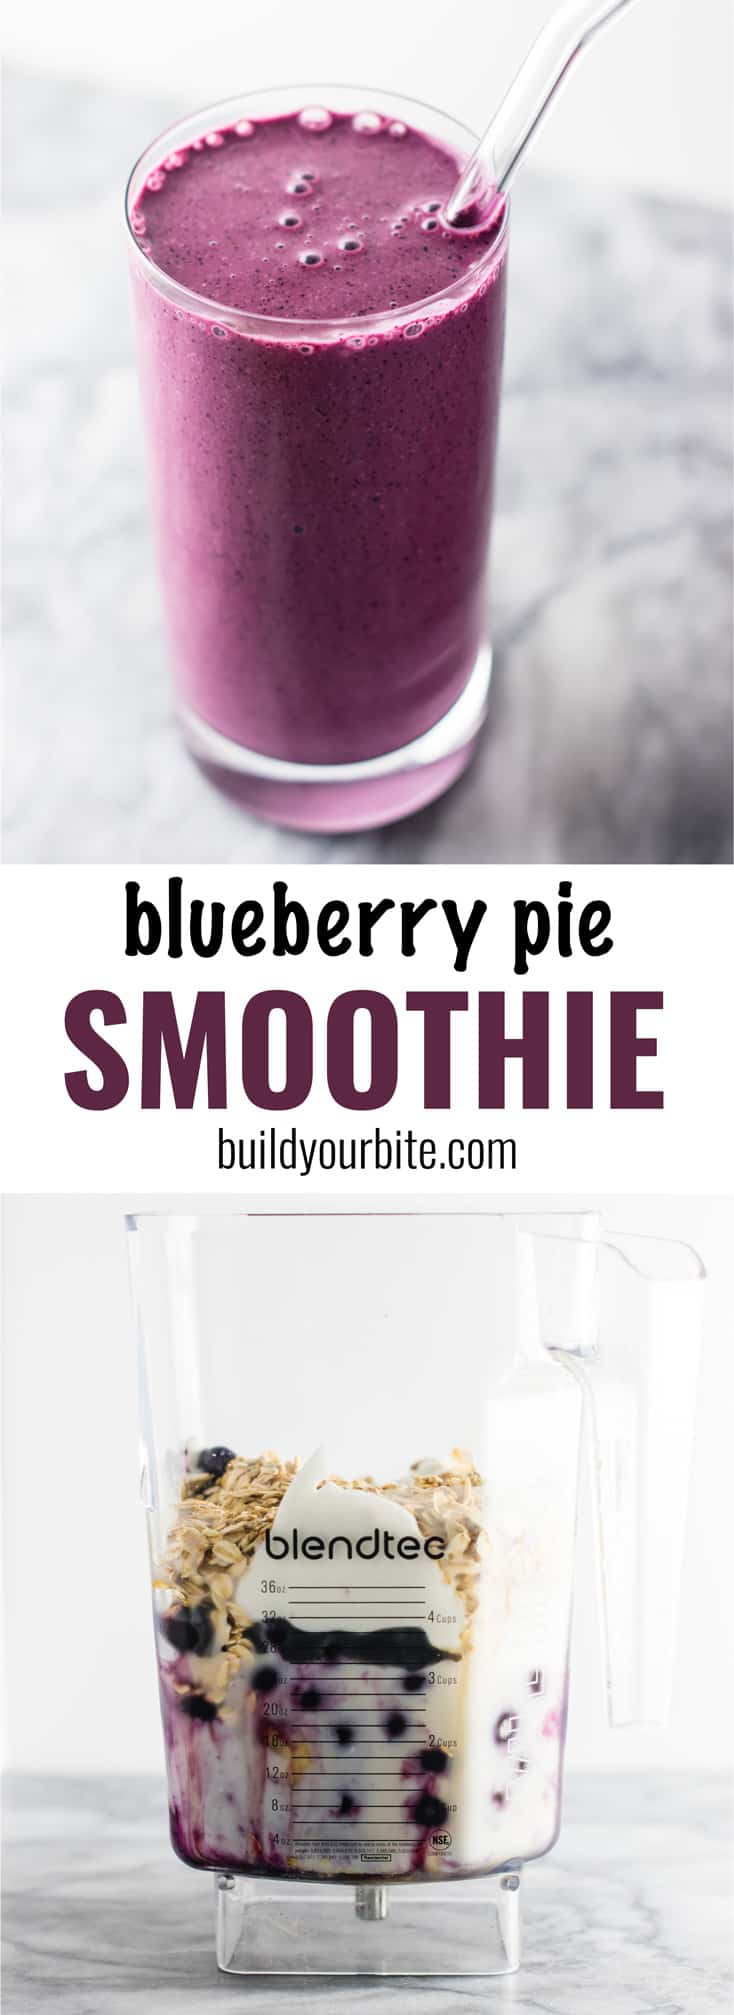 Healthy blueberry pie smoothie recipe with greek yogurt and rolled oats. A breakfast or dessert full of juicy blueberry flavor! #healthy #blueberrysmoothie #blueberrypiesmoothie #vegetarian #greekyogurt #lemonzest #glutenfree